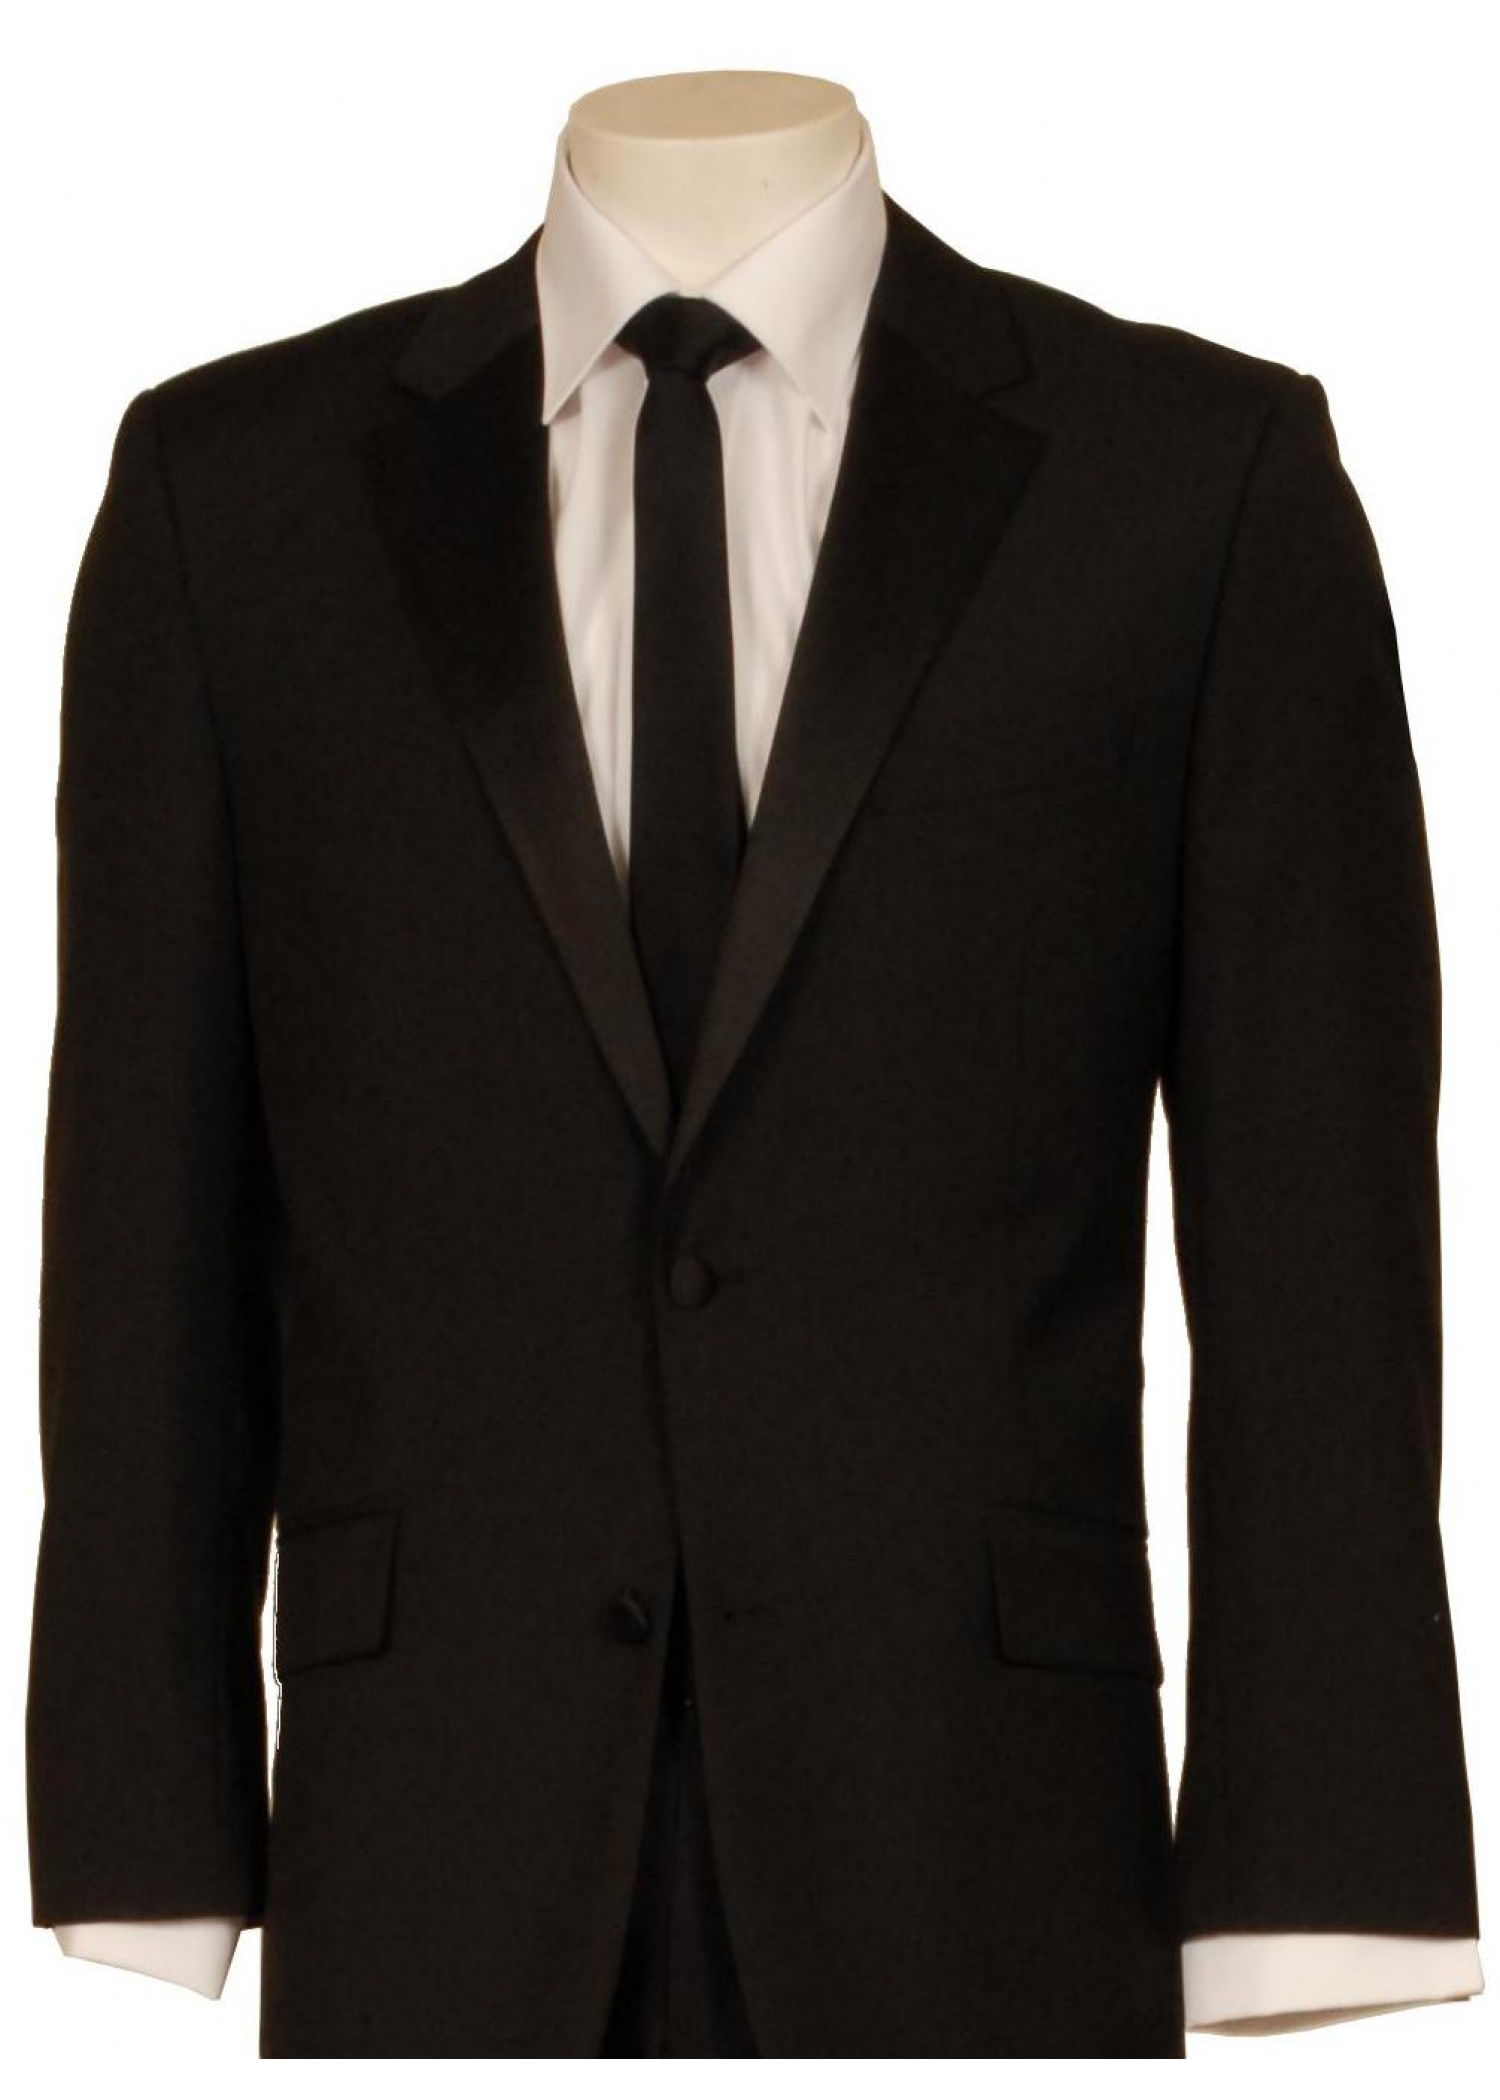 Black Tuxedo - Tom Murphy's Formal and Menswear